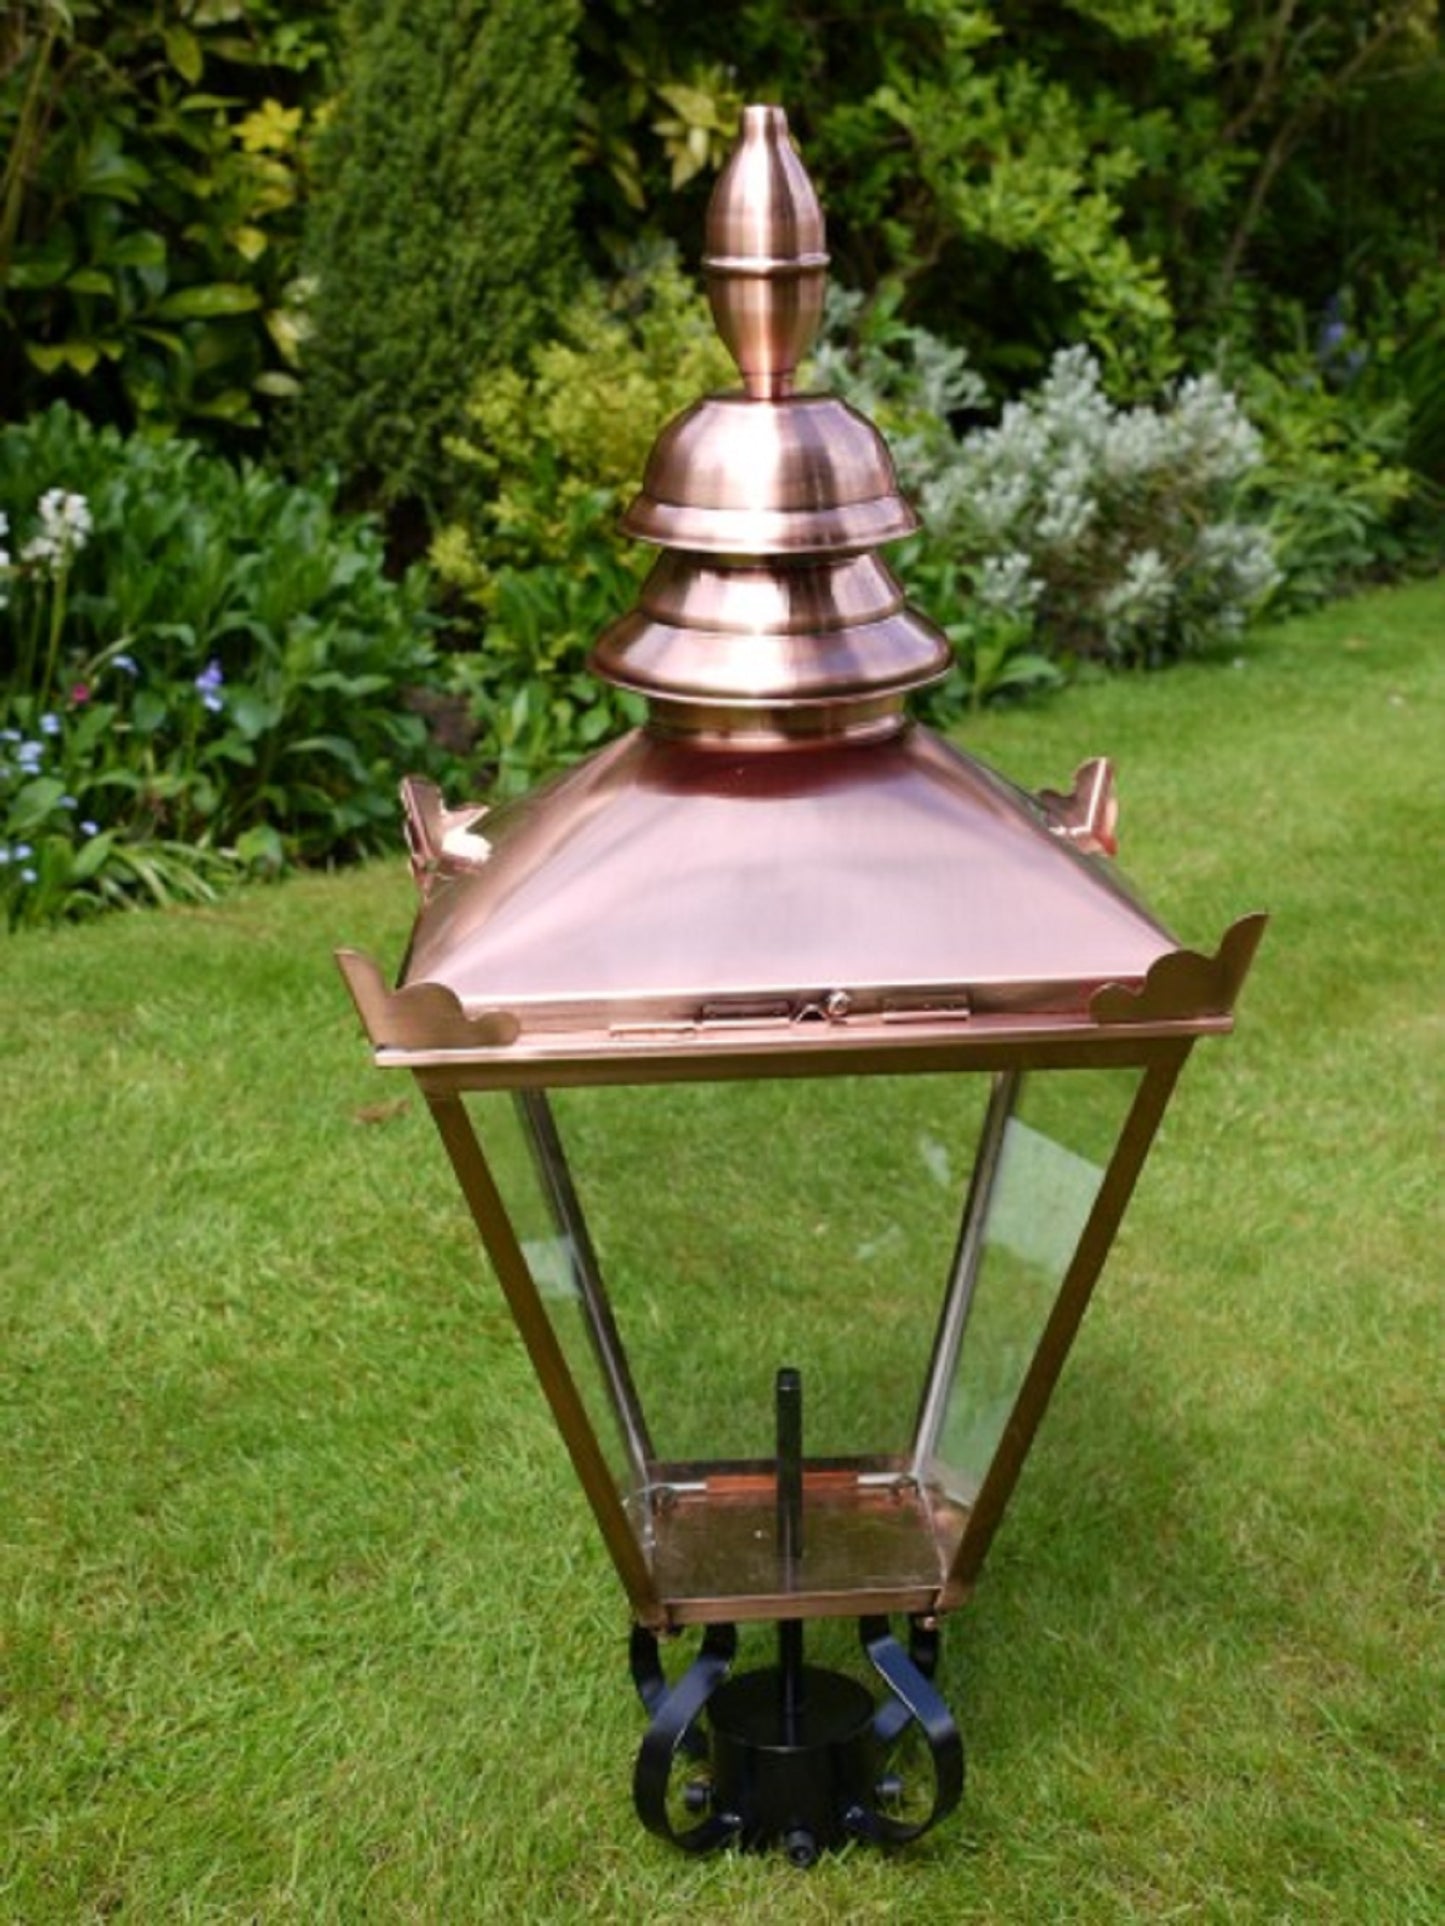 32"x15" Stain Copper Finish Lantern Lamp Top